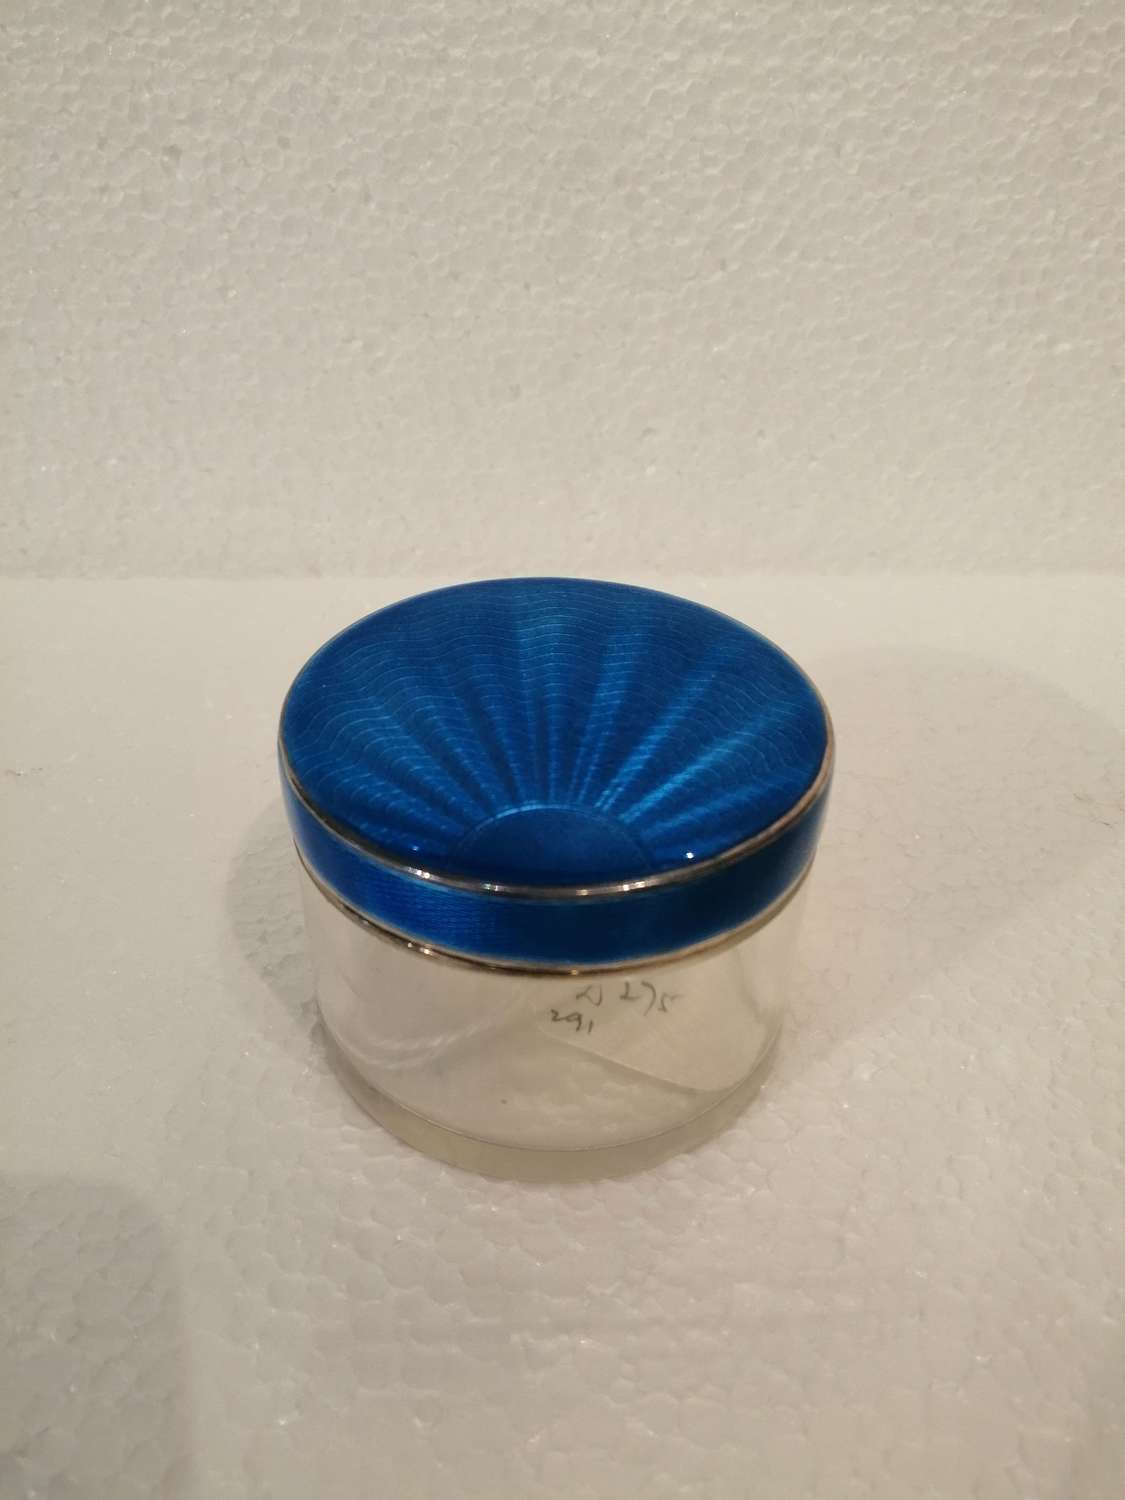 An Art Deco glass and guilloche enamel jar